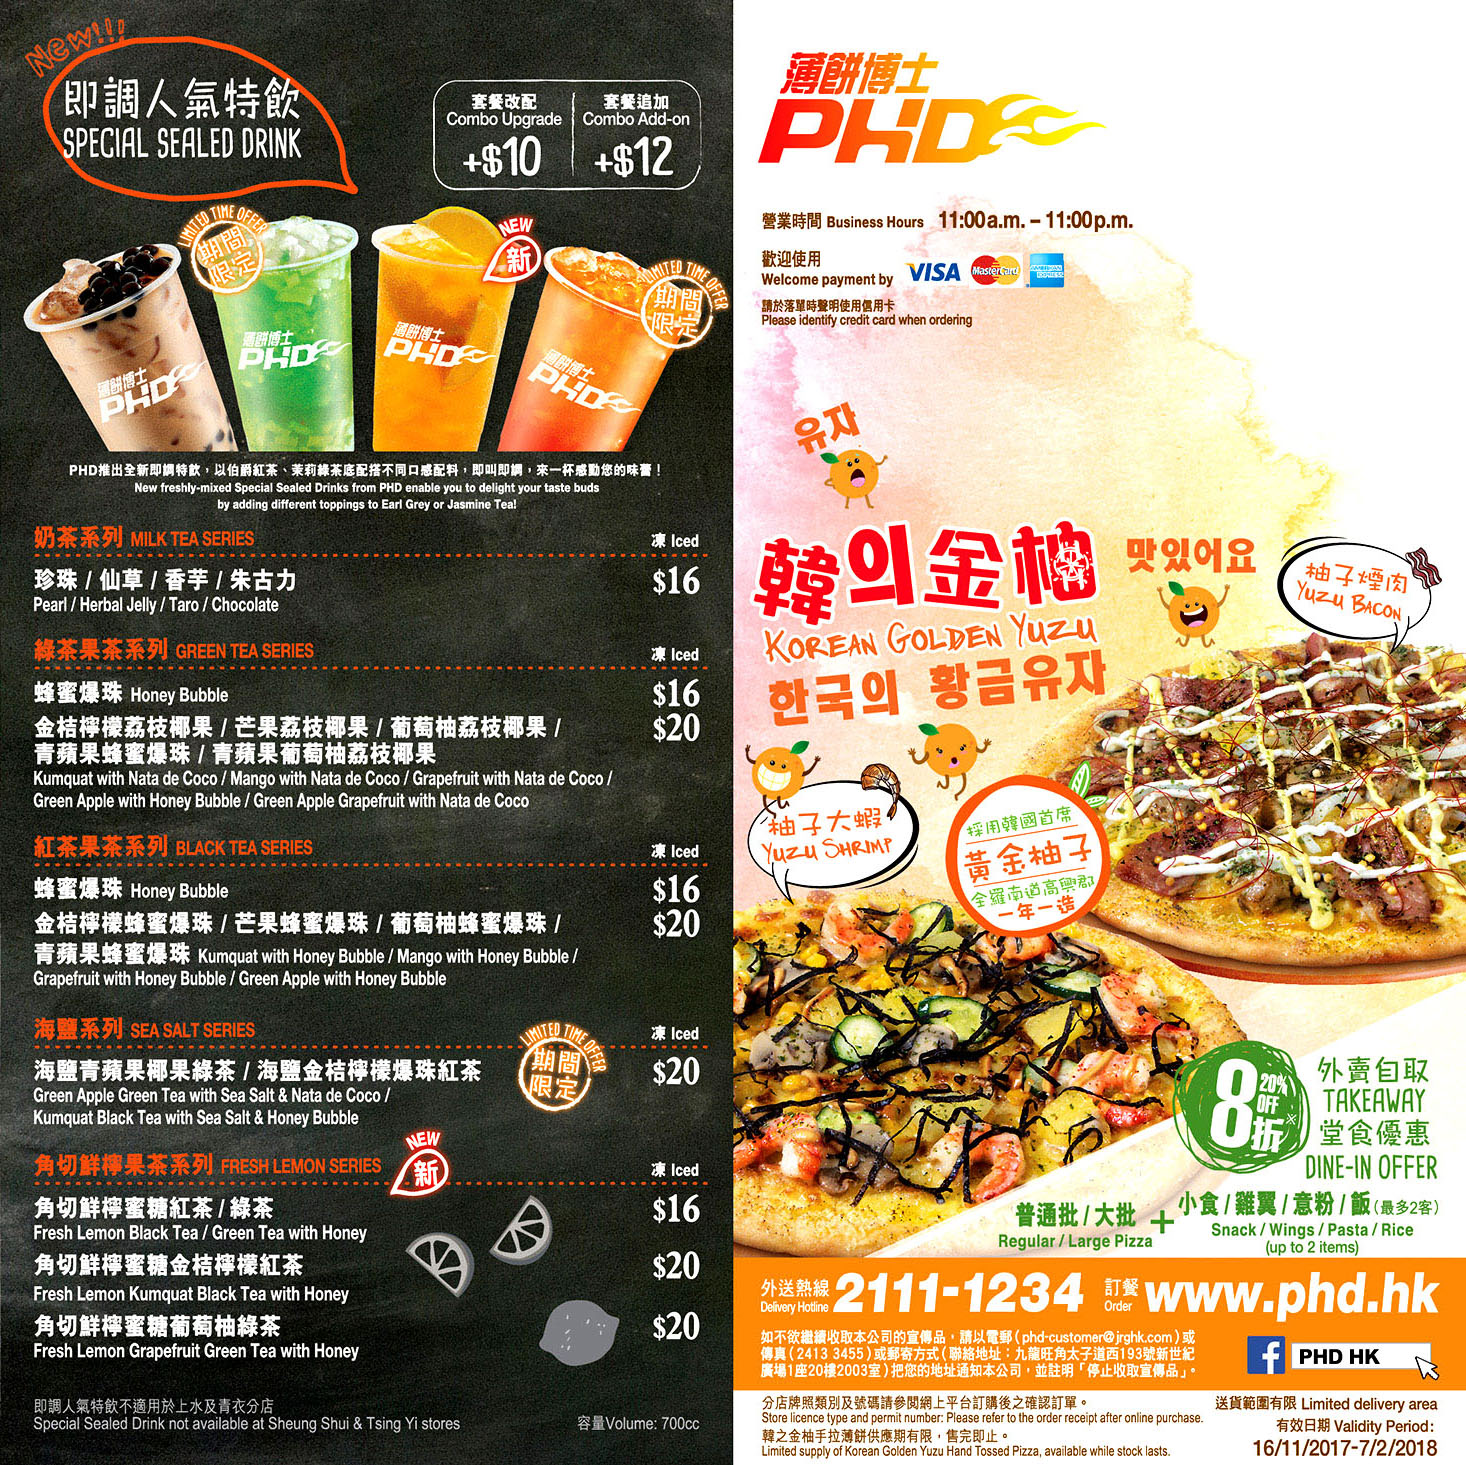 PHD 薄餅博士 italian pizza hut delivery hong kong - 薄餅速遞服務外賣電話小食餐飲套餐美食餐廳飲食餐牌價目表